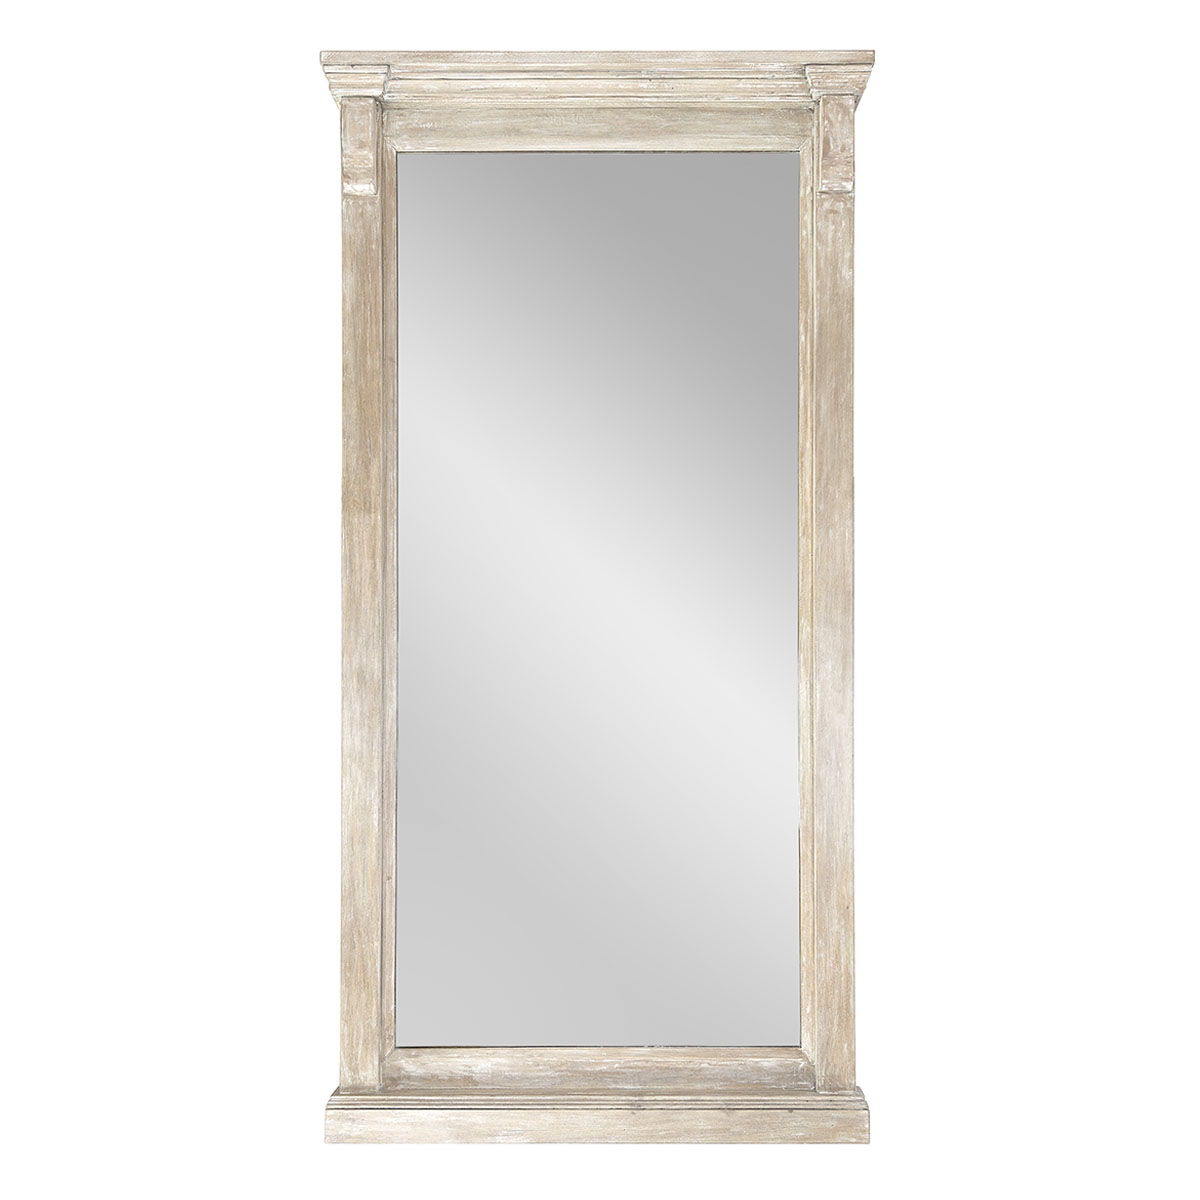 Adelaide - Floor Mirror - Natural White Wash